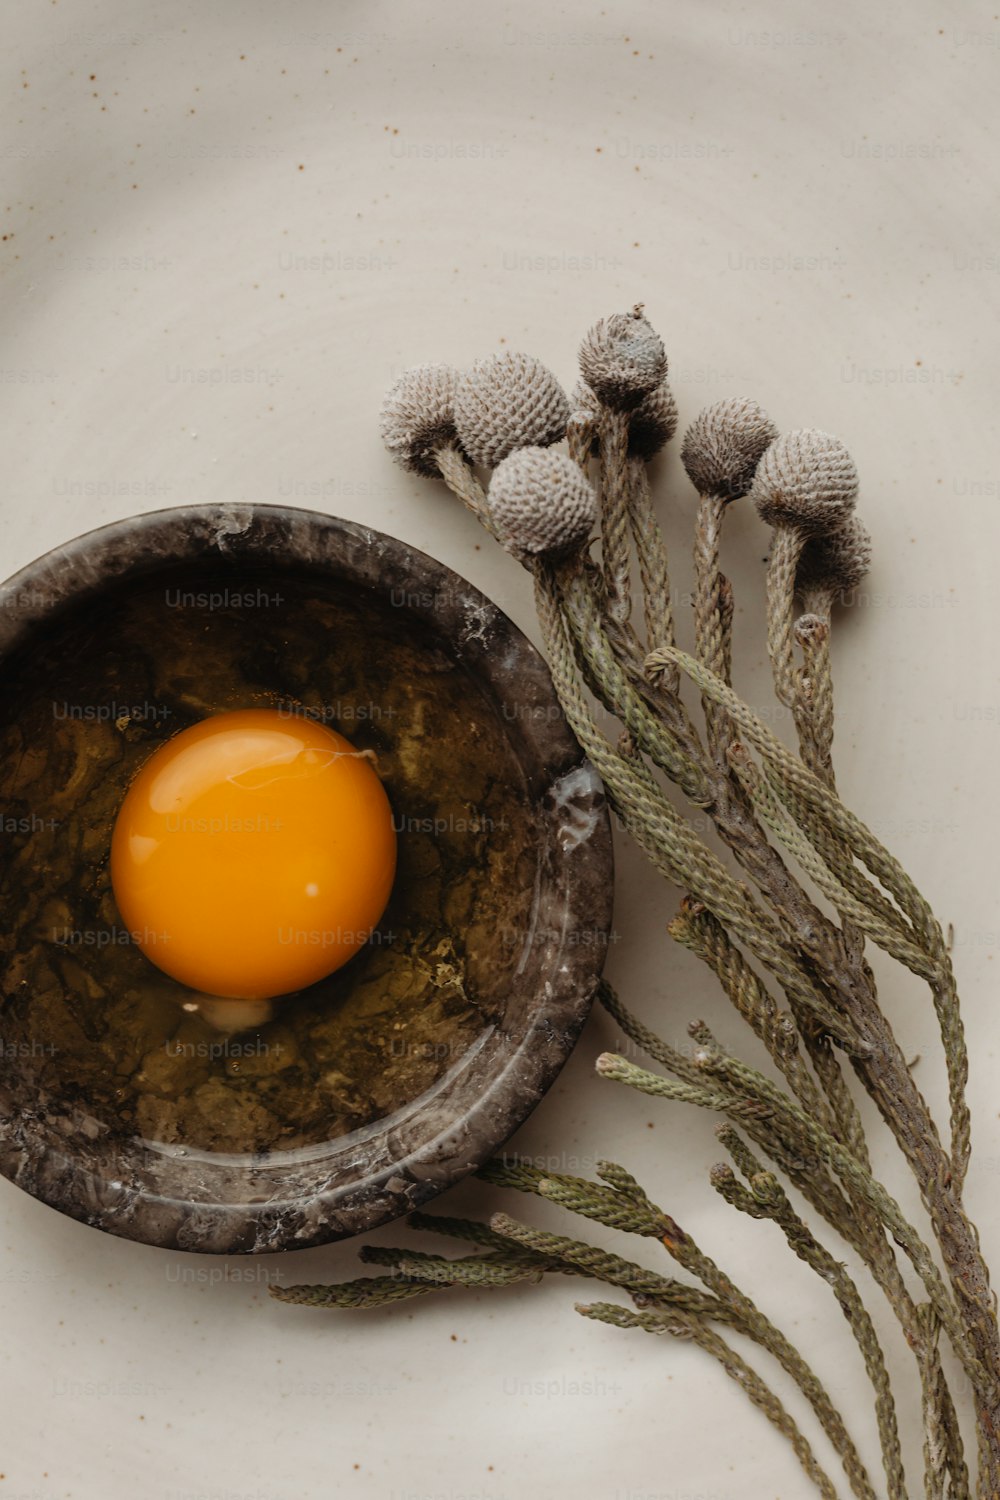 Un huevo está en un tazón en un plato